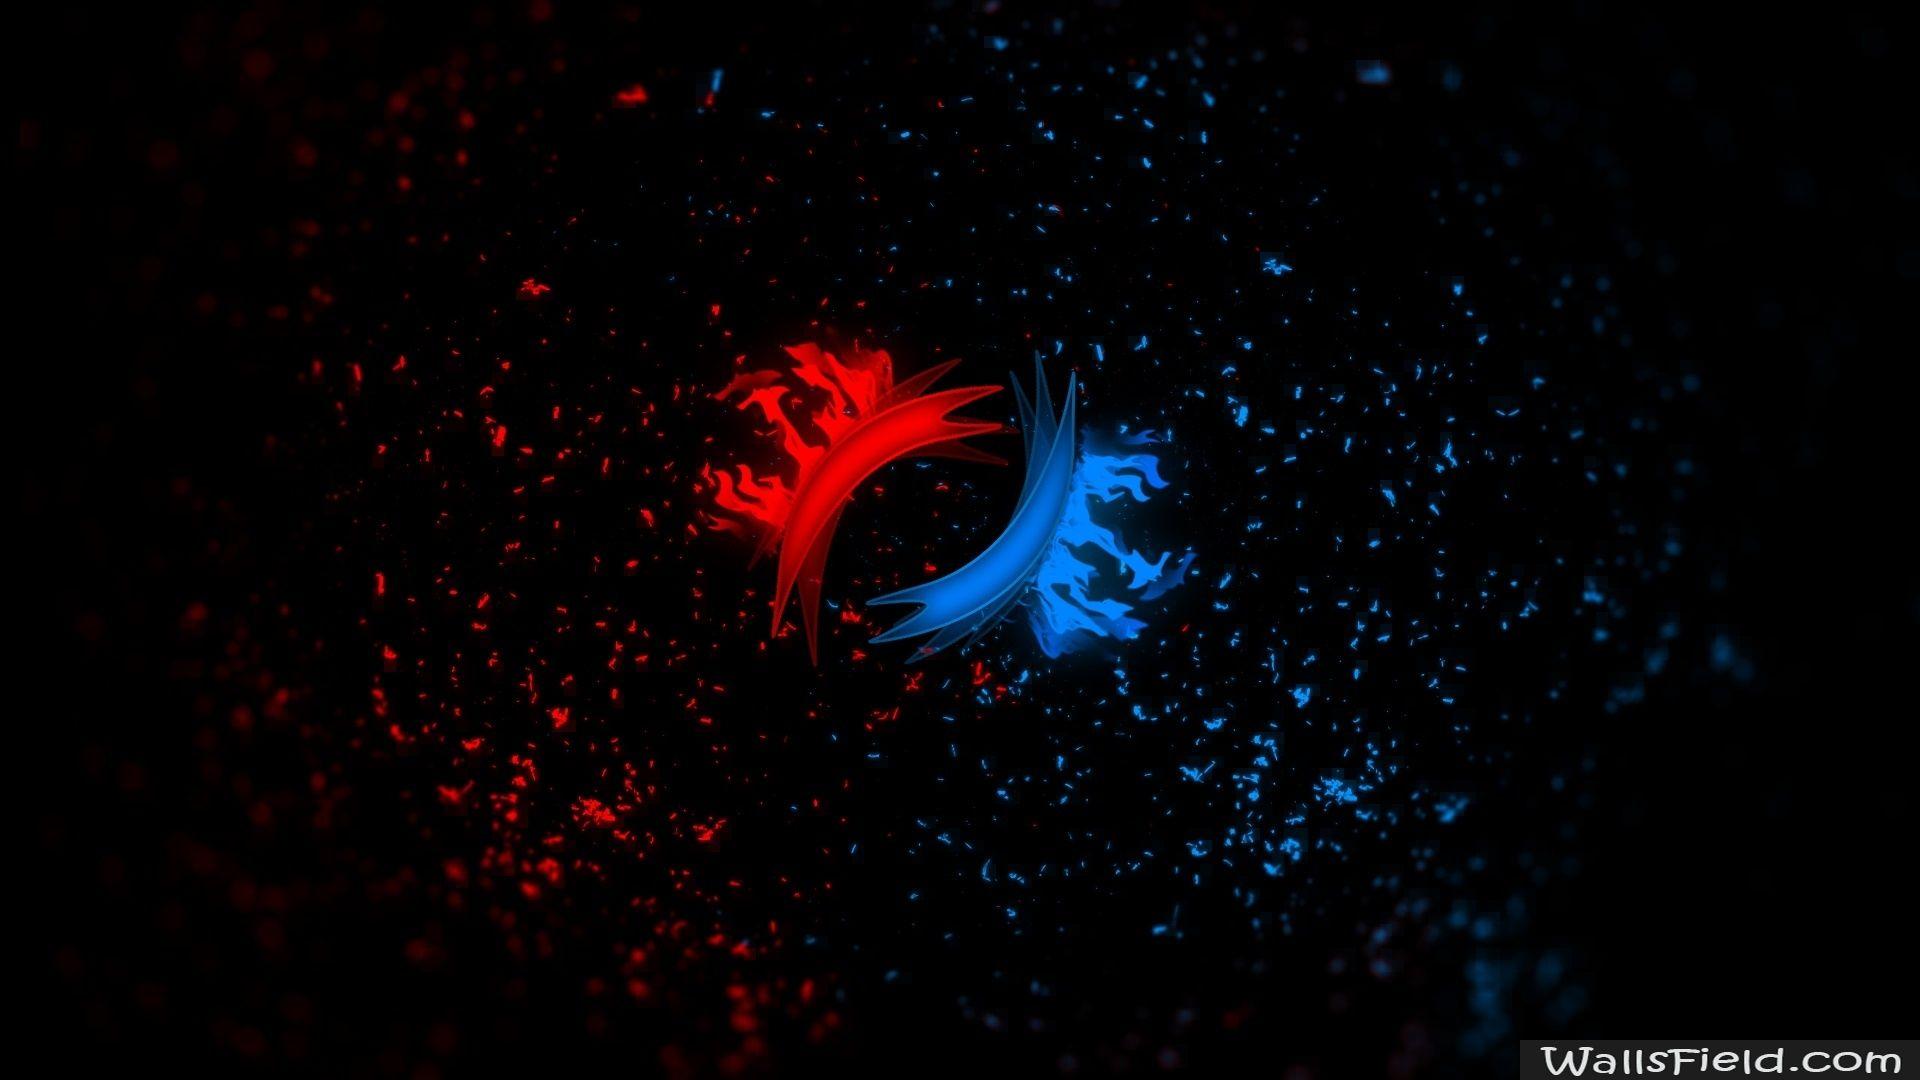 Space Red vs Blue.com. Free HD Wallpaper